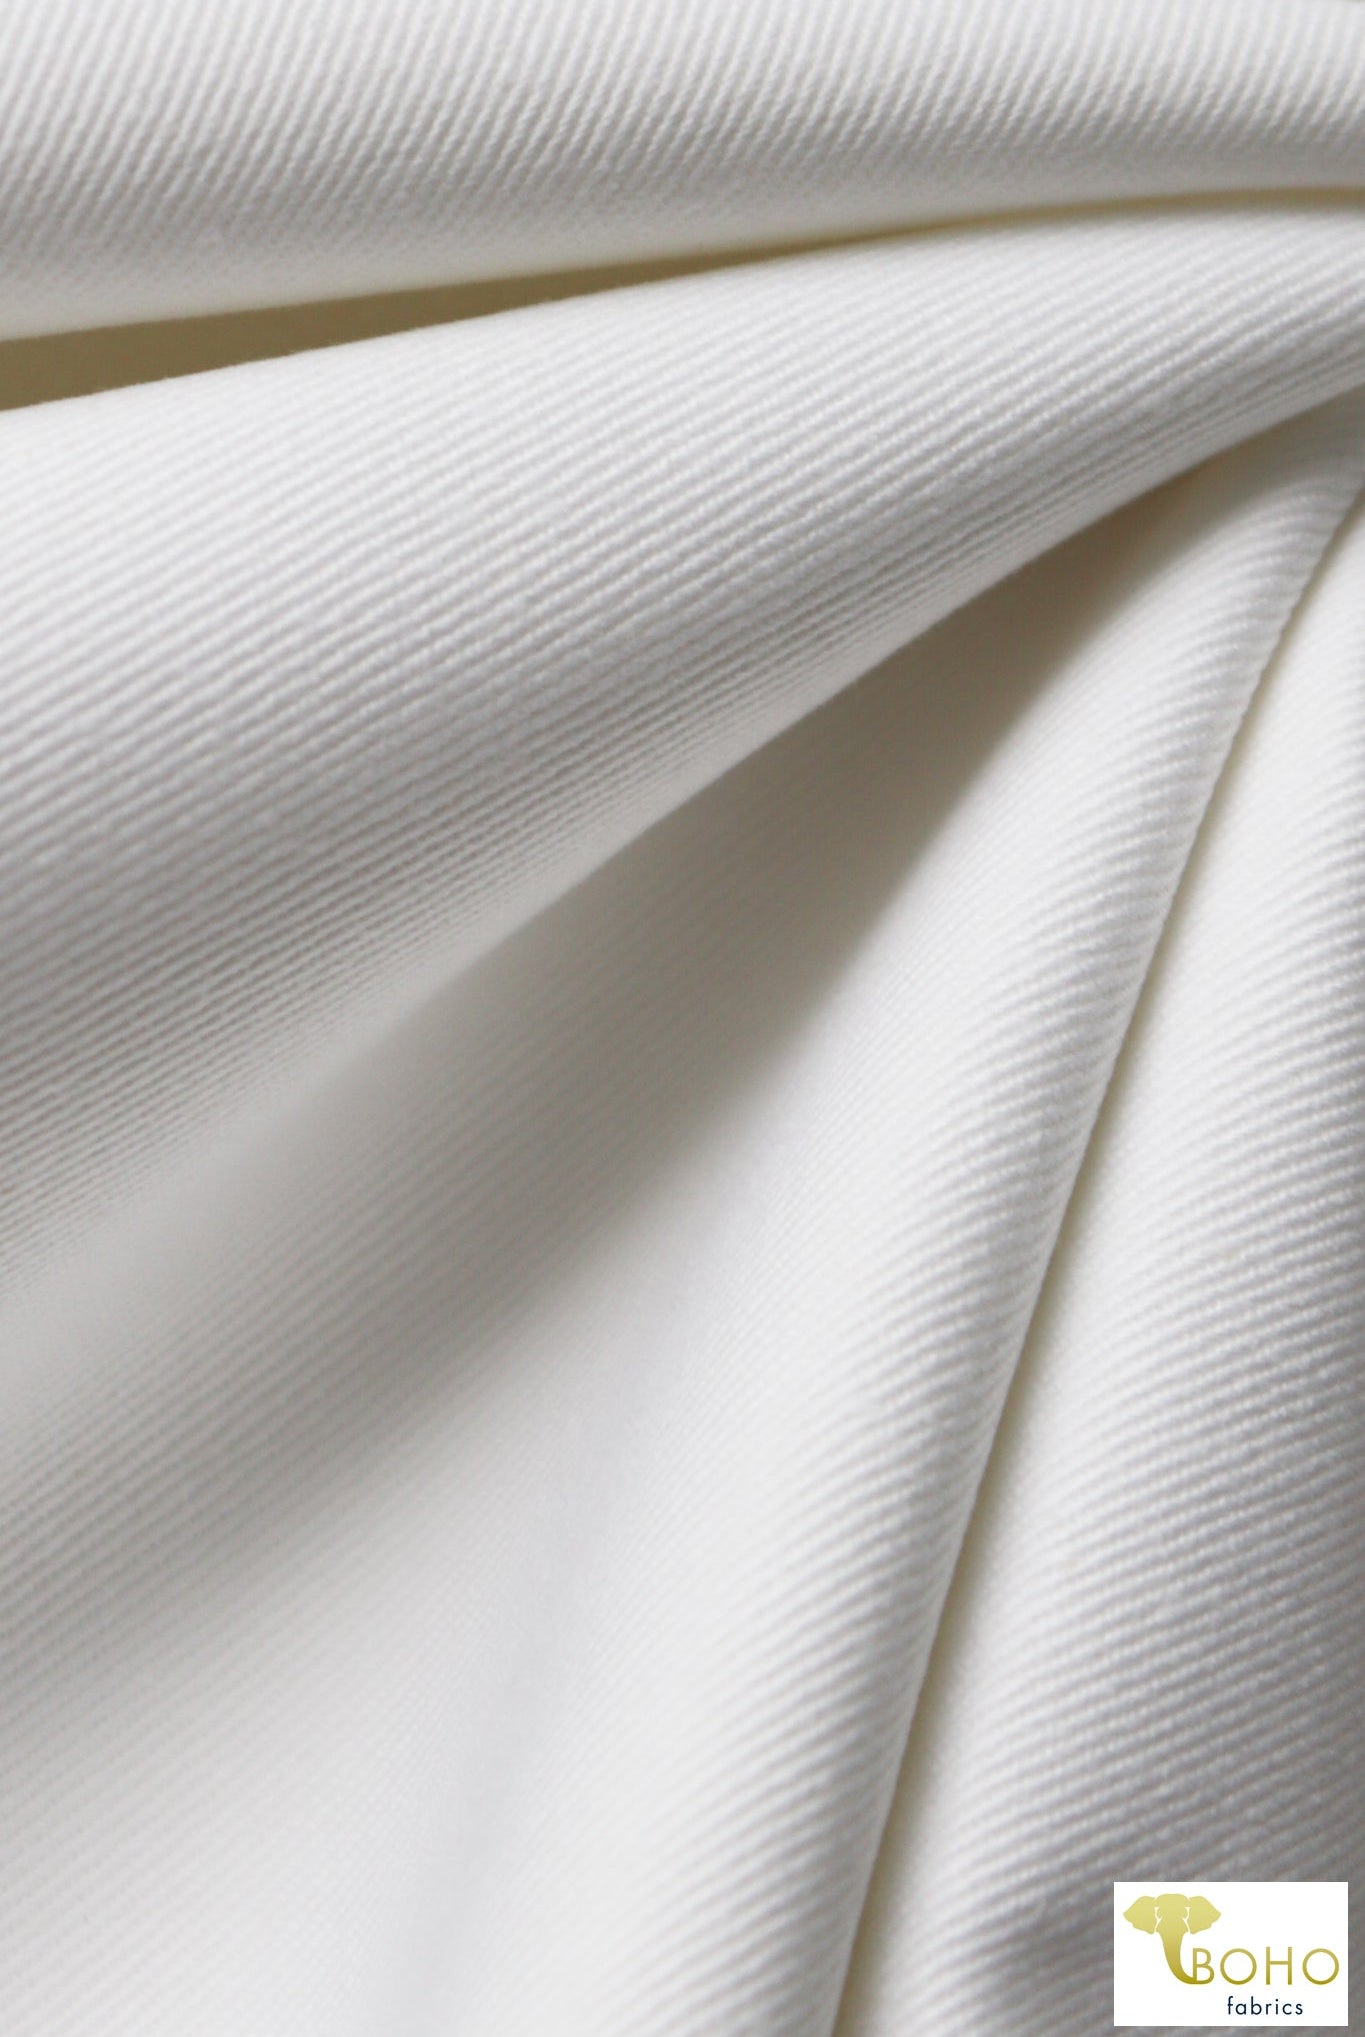 Creamy White, Twill Woven - Boho Fabrics